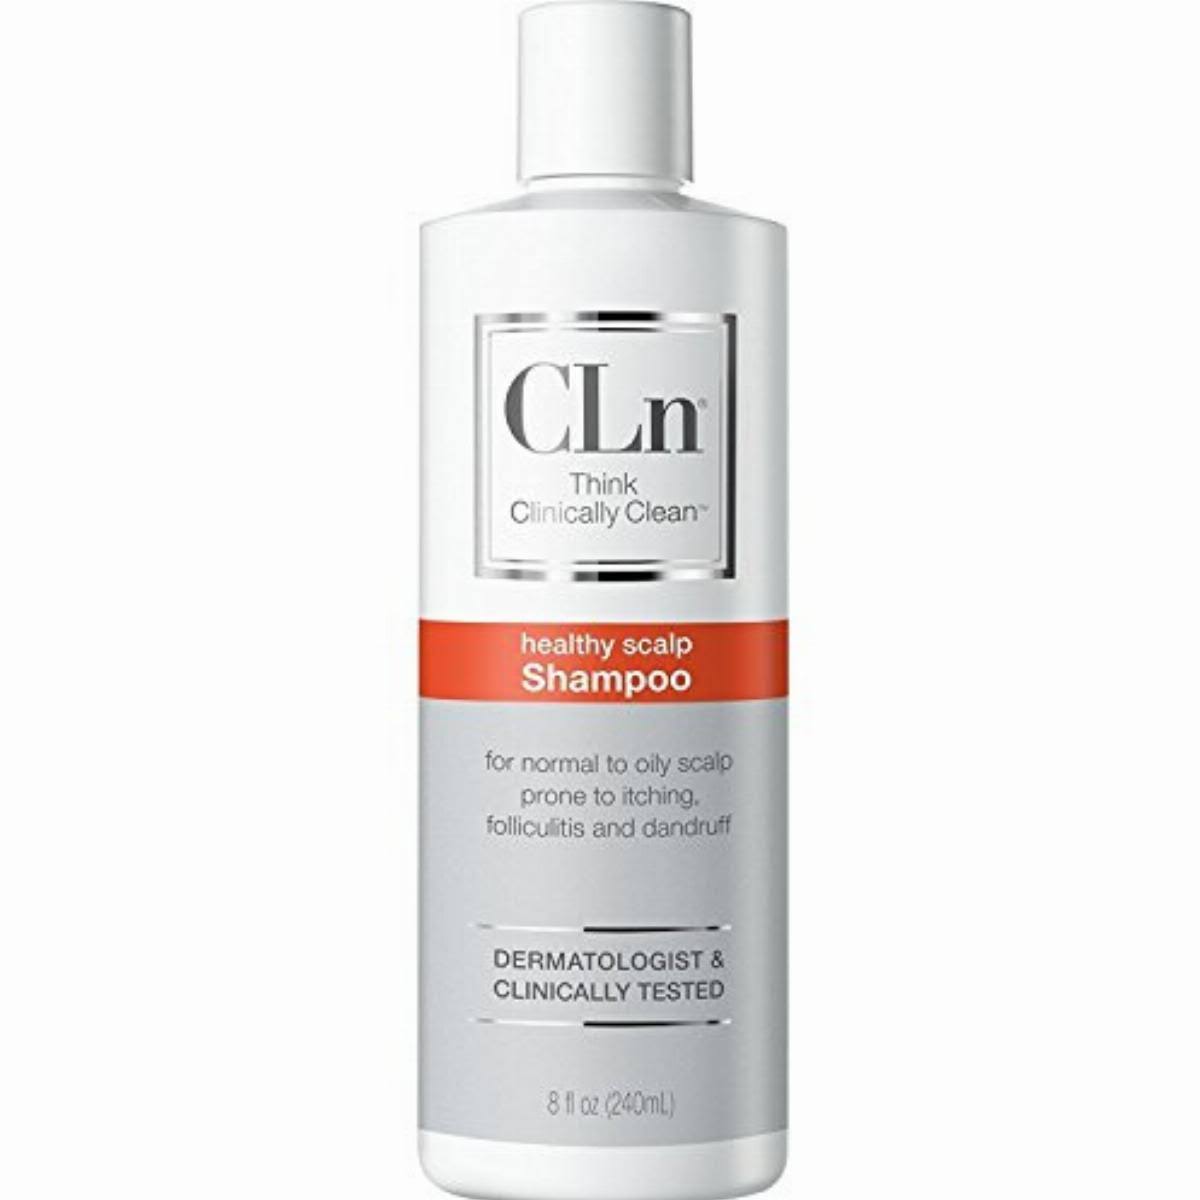 CLn Healthy Scalp Shampoo - 8oz